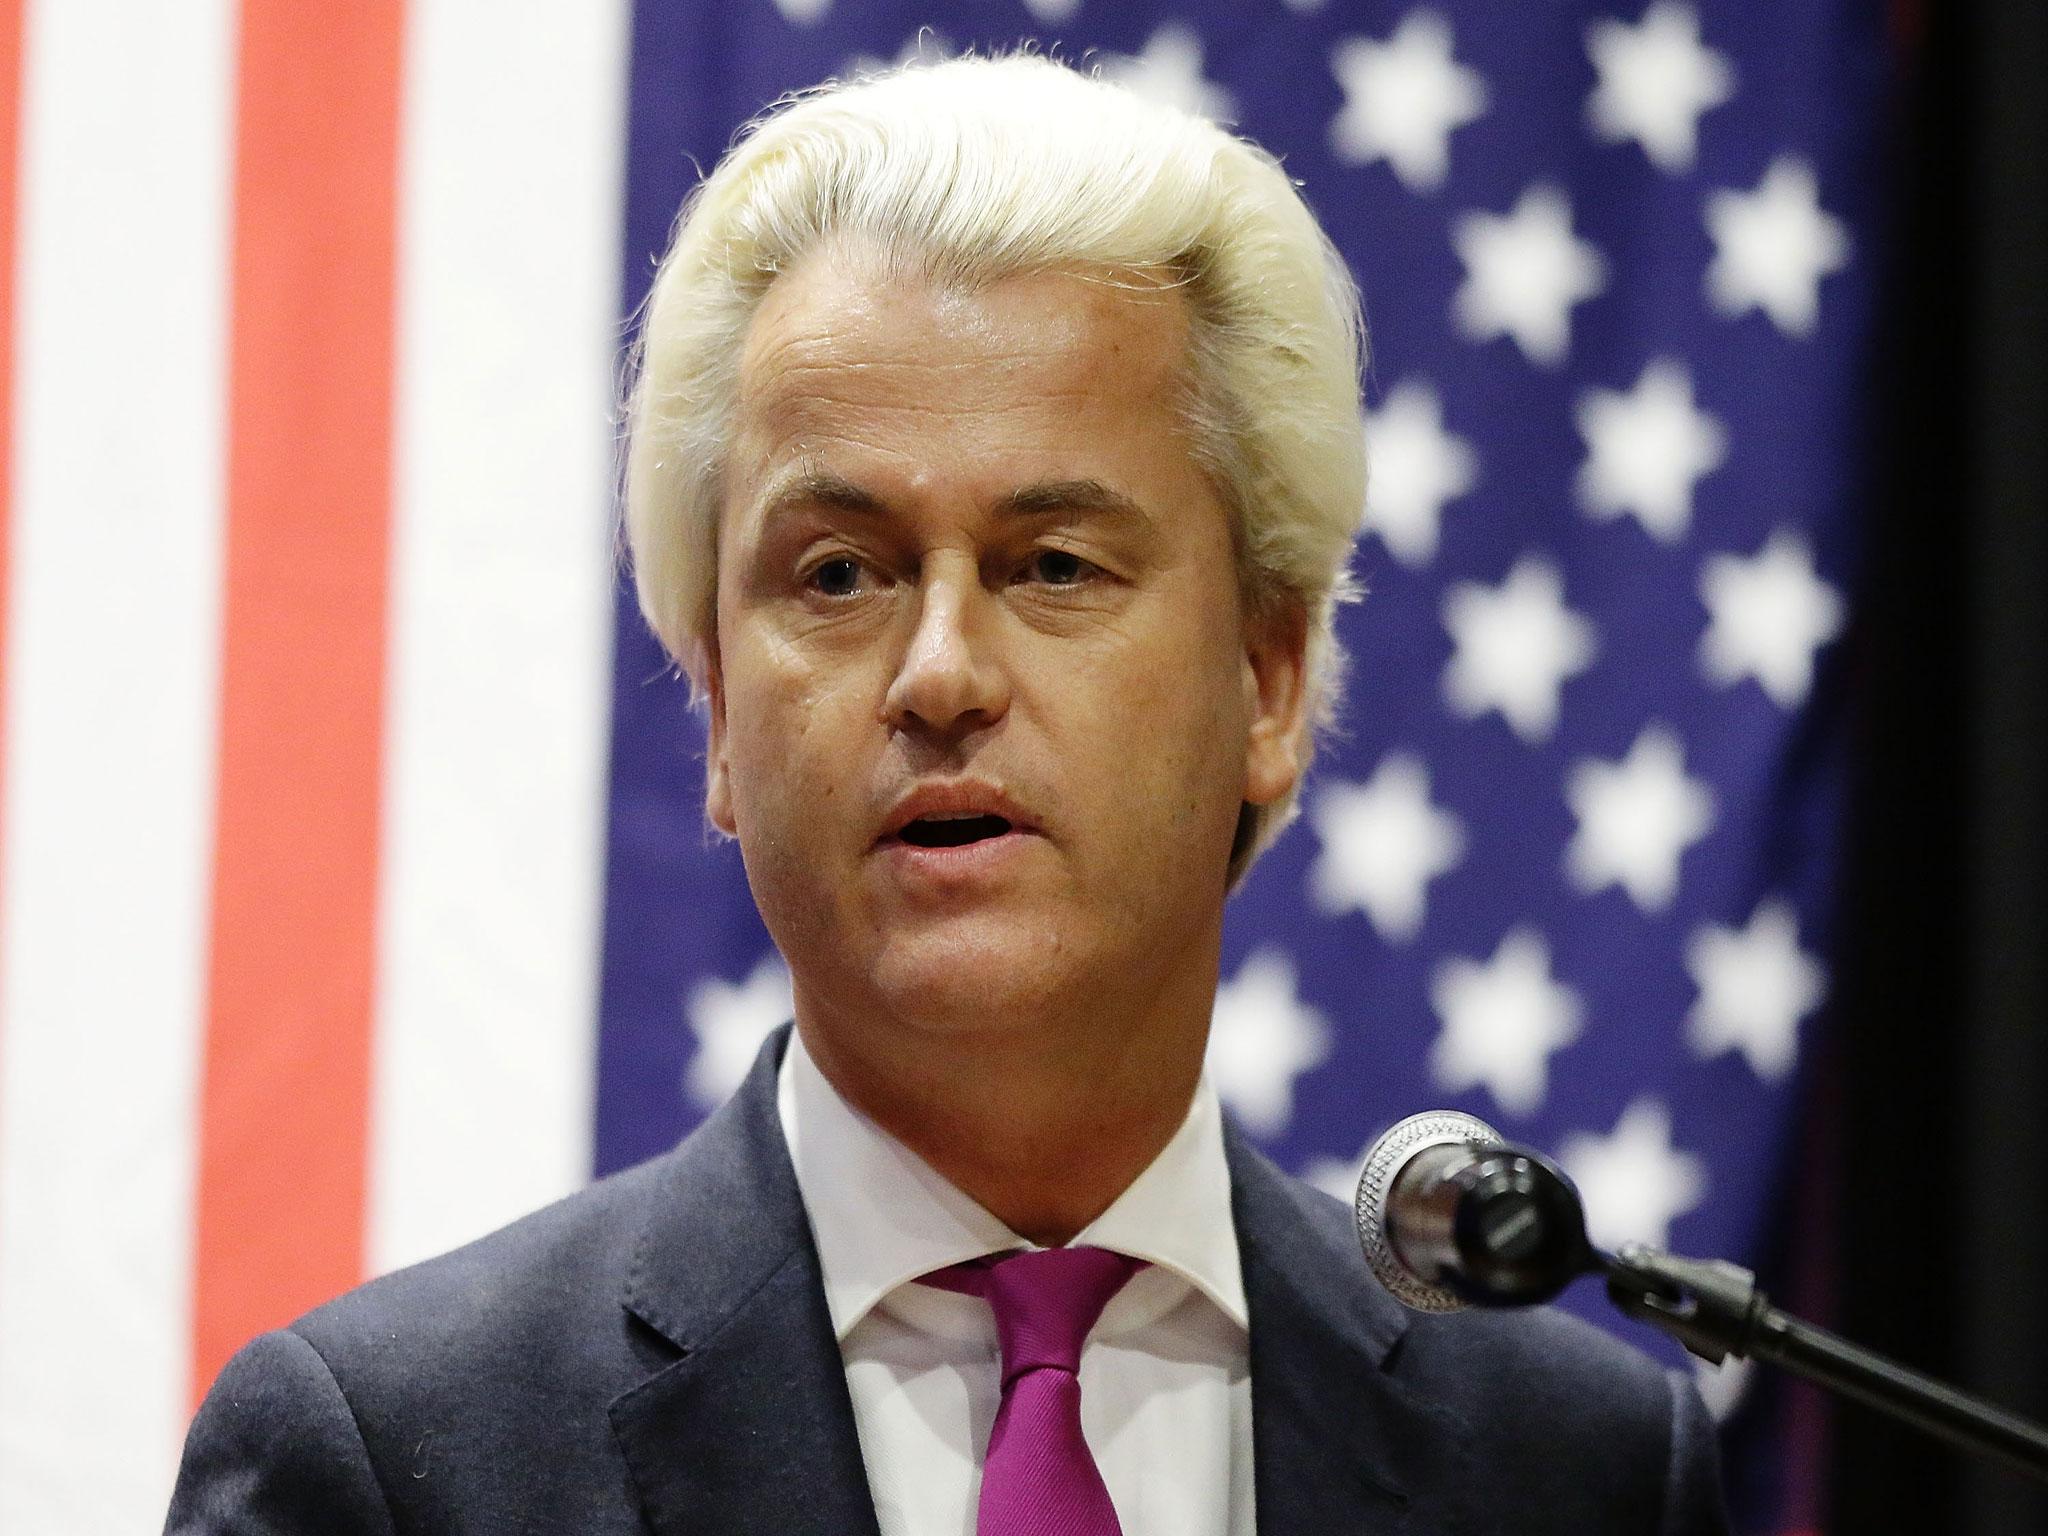 Geert Wilders endorsed Mr Trump during his divisive campaign